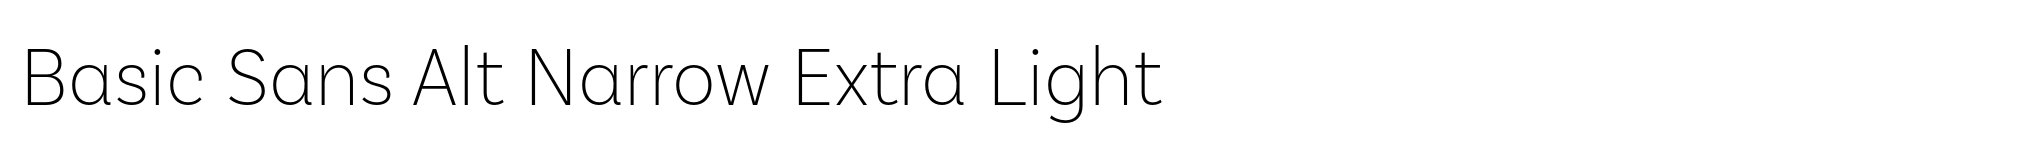 Basic Sans Alt Narrow Extra Light image